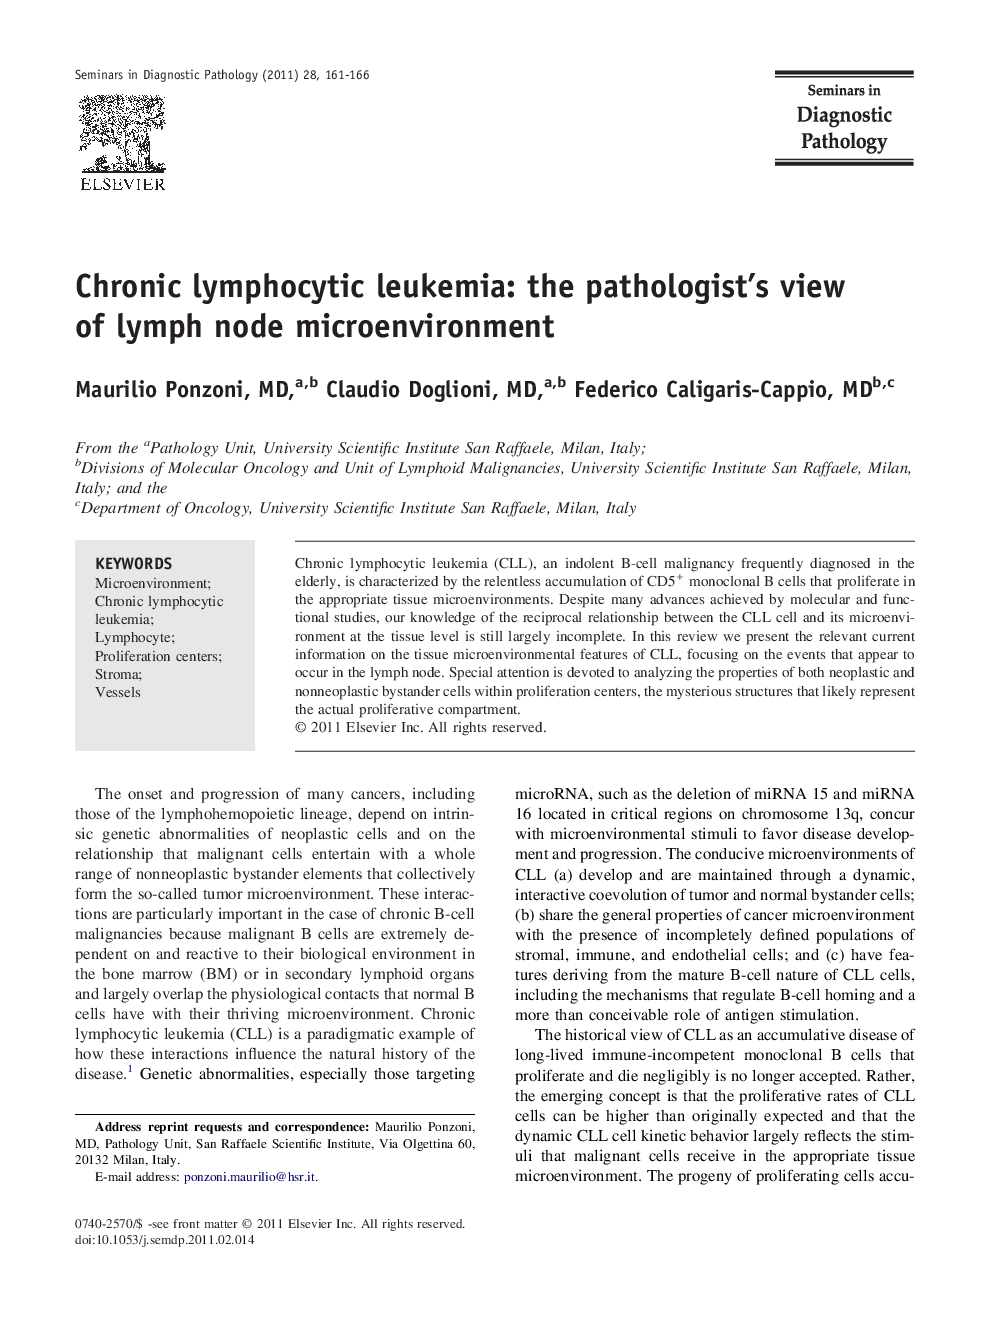 Chronic lymphocytic leukemia: the pathologist's view of lymph node microenvironment